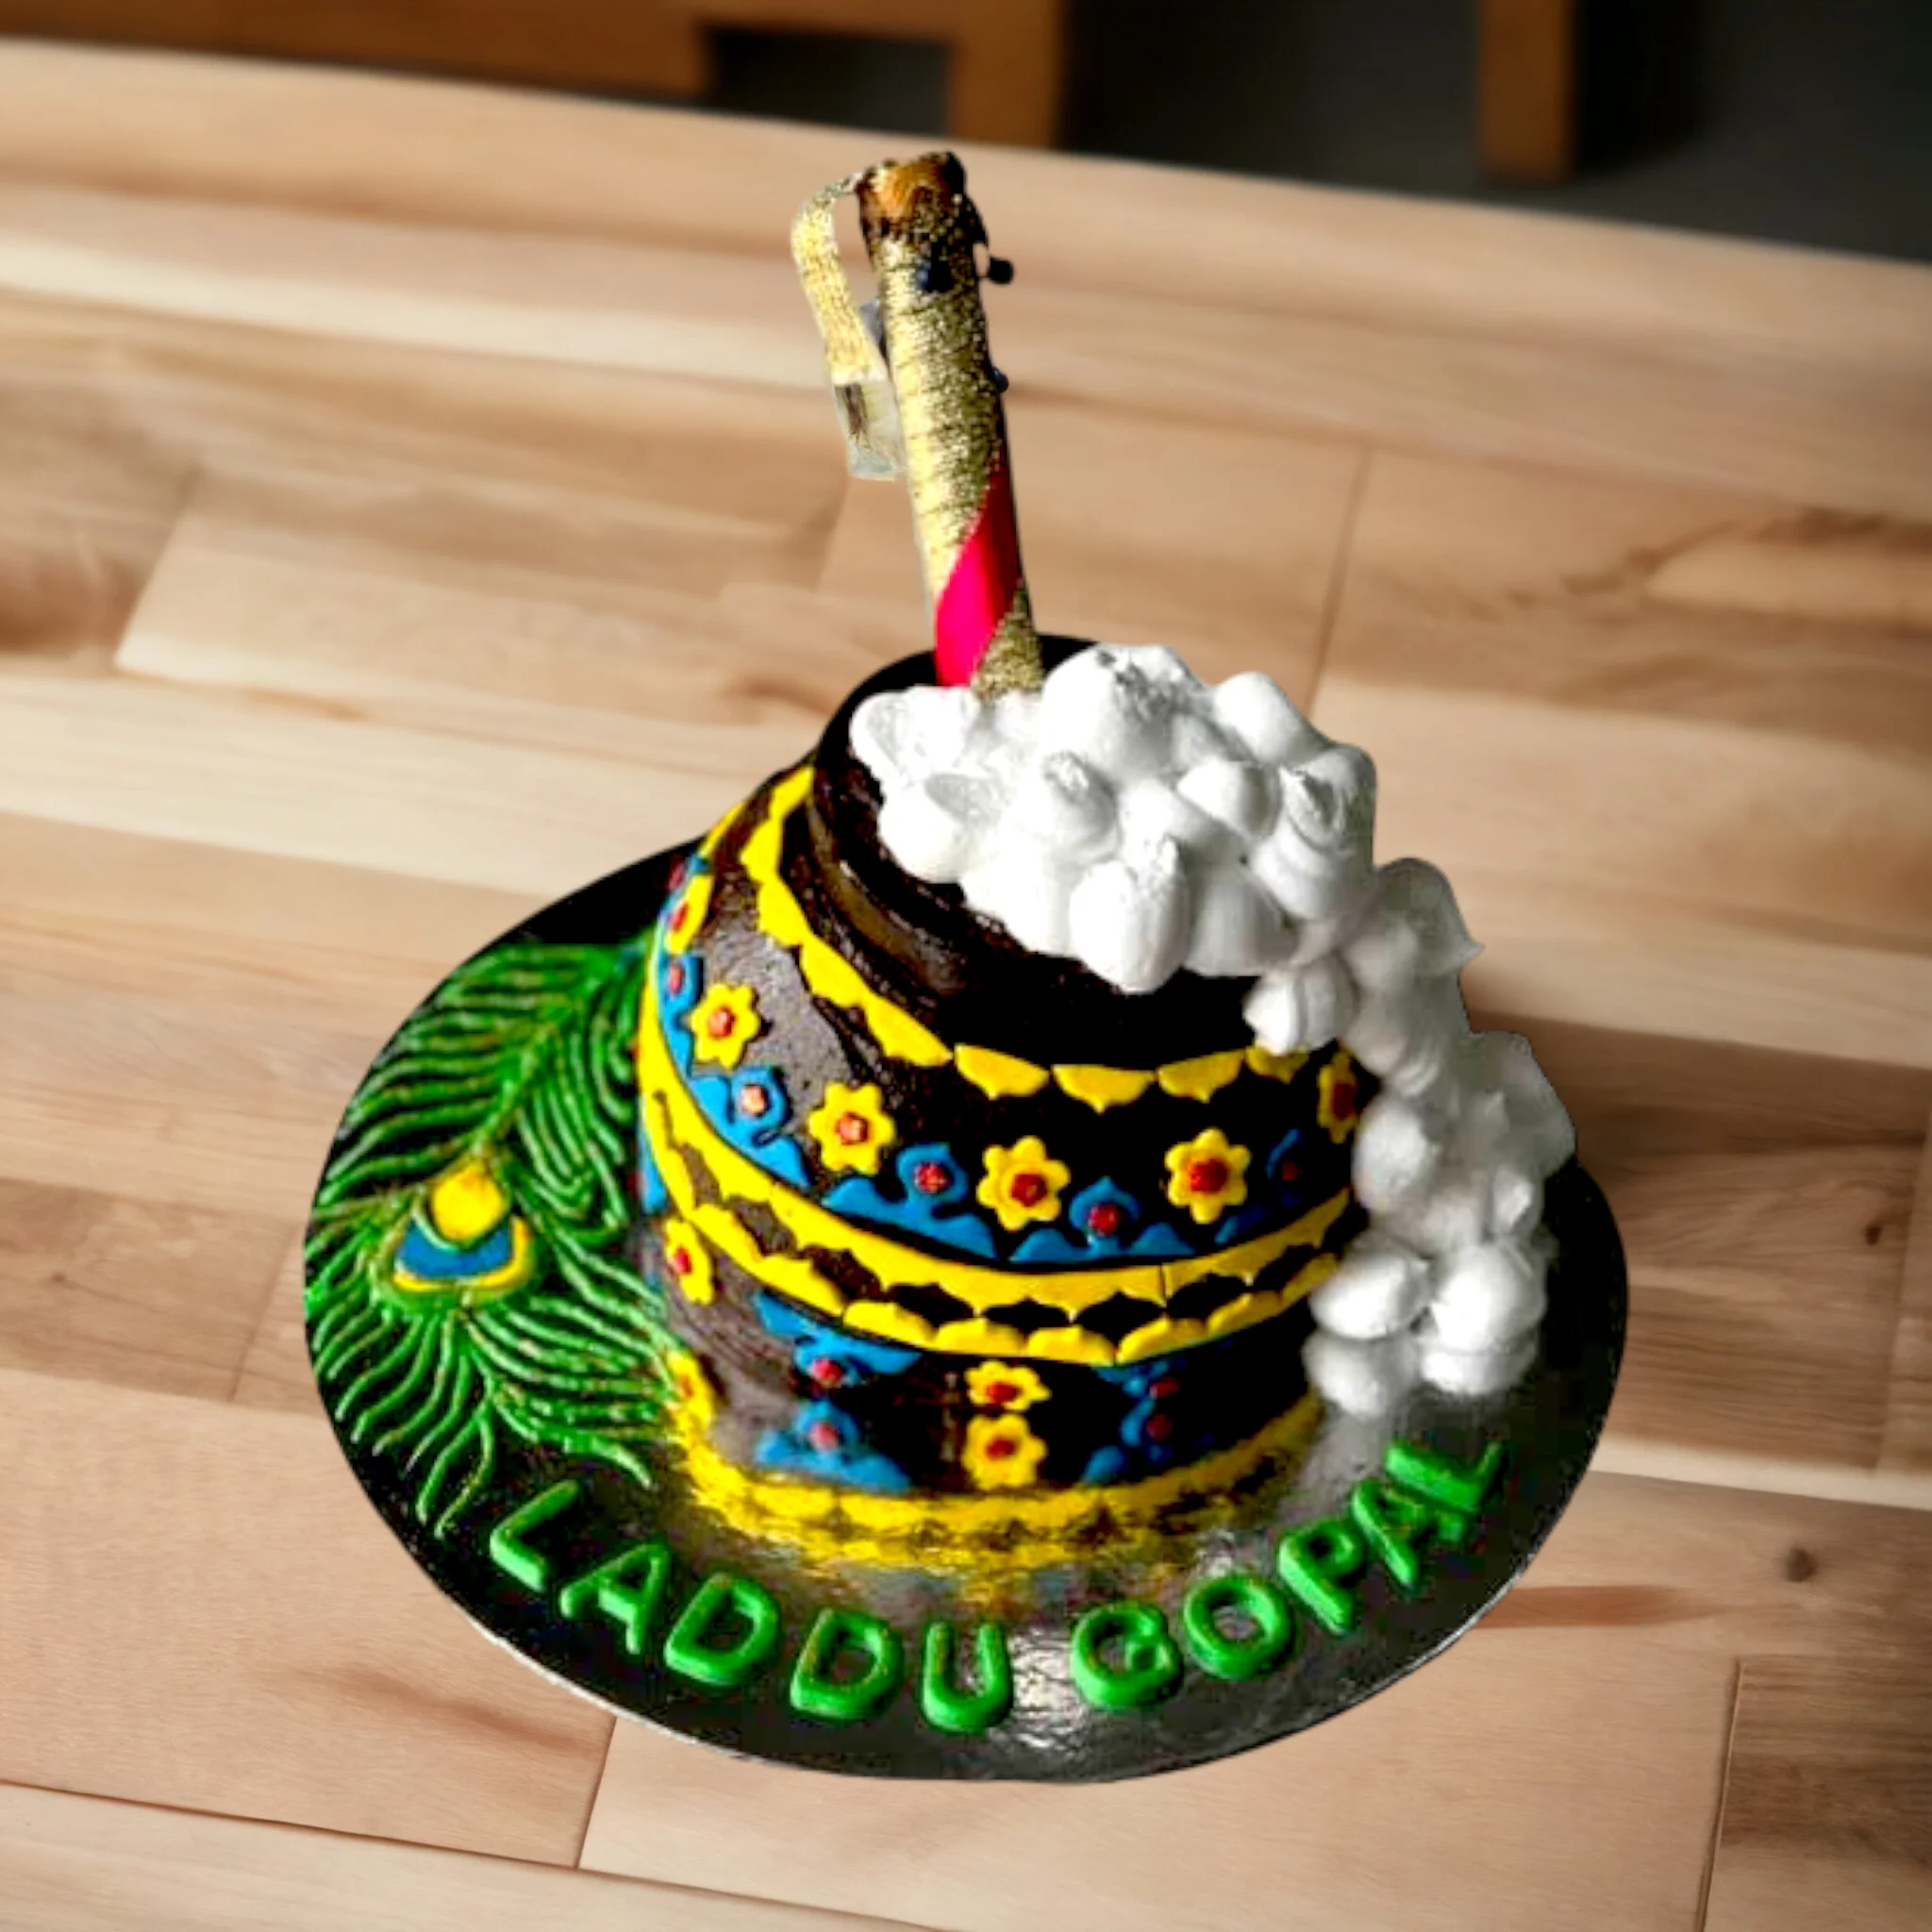 Scrumptious Delights - Biryani Handi cake - gulab jamun flvor #cake #cakes  #birthdaycake #cakedecorating #food #dessert #birthday #cakedesign #baking  #yummy #homemade #love #sweet #foodie #bakery #delicious #cakeart  #happybirthday #scrumptiousdelights ...